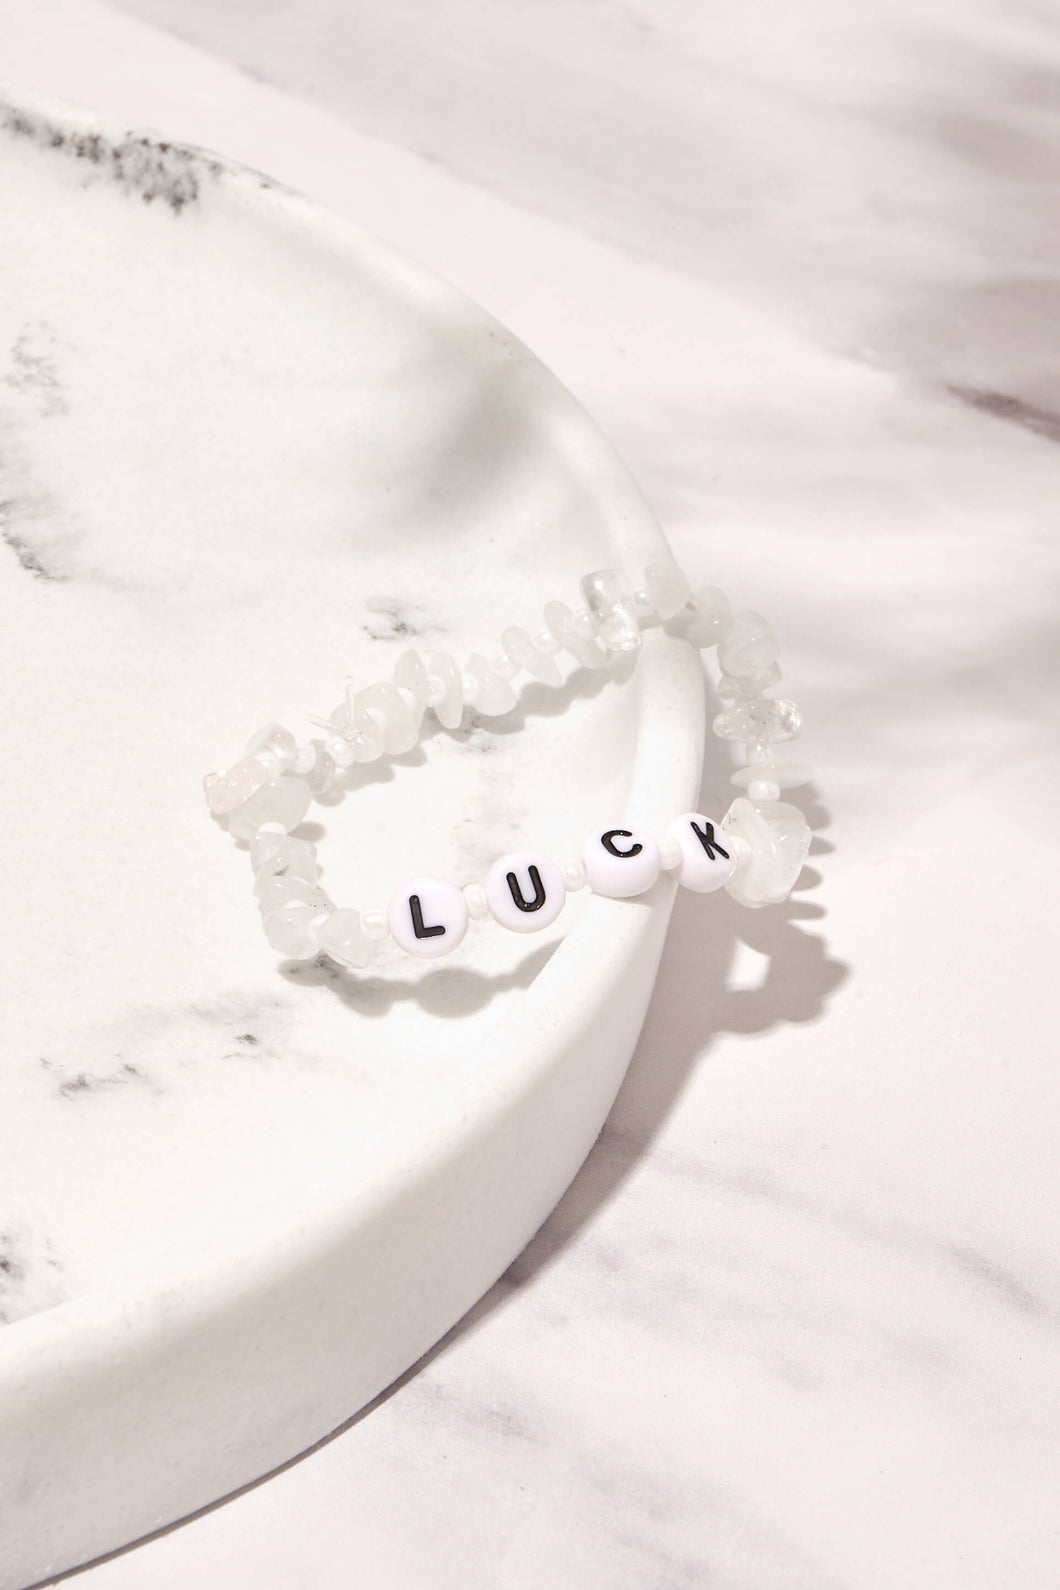 Lucky moonstone bracelet presented on white marble background